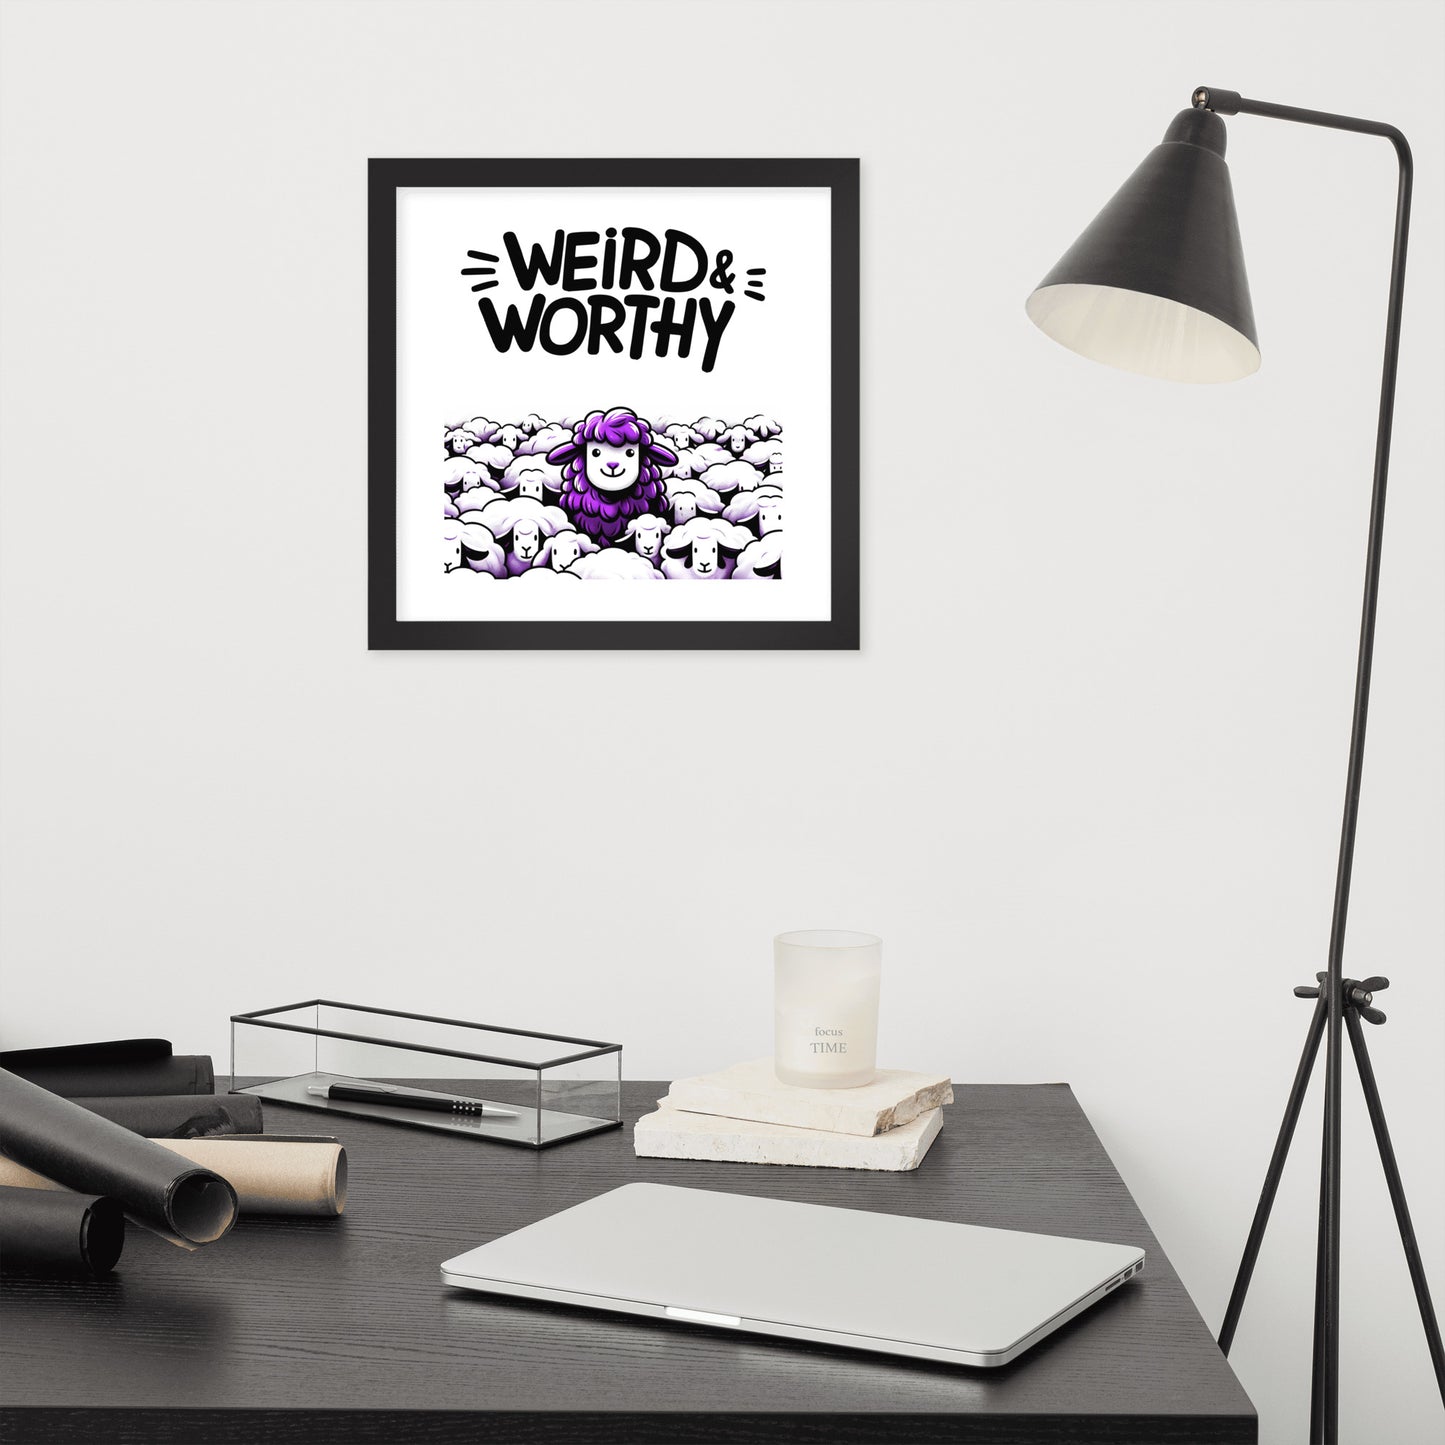 GWMS "Weird & Worthy" Framed poster